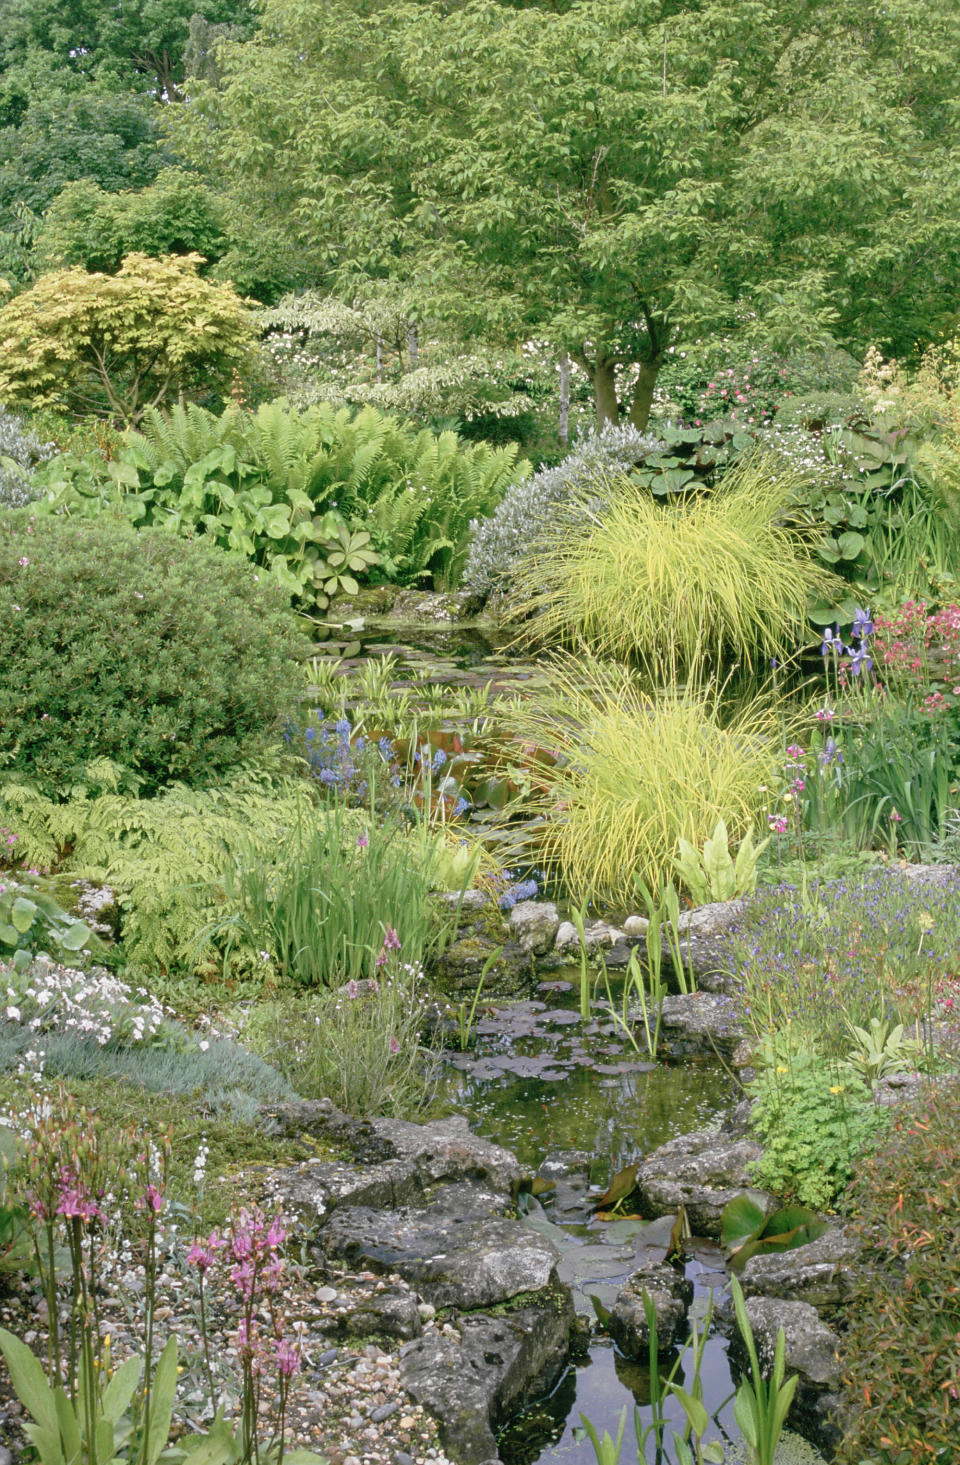 3. Use a rock garden to highlight a stream or pond